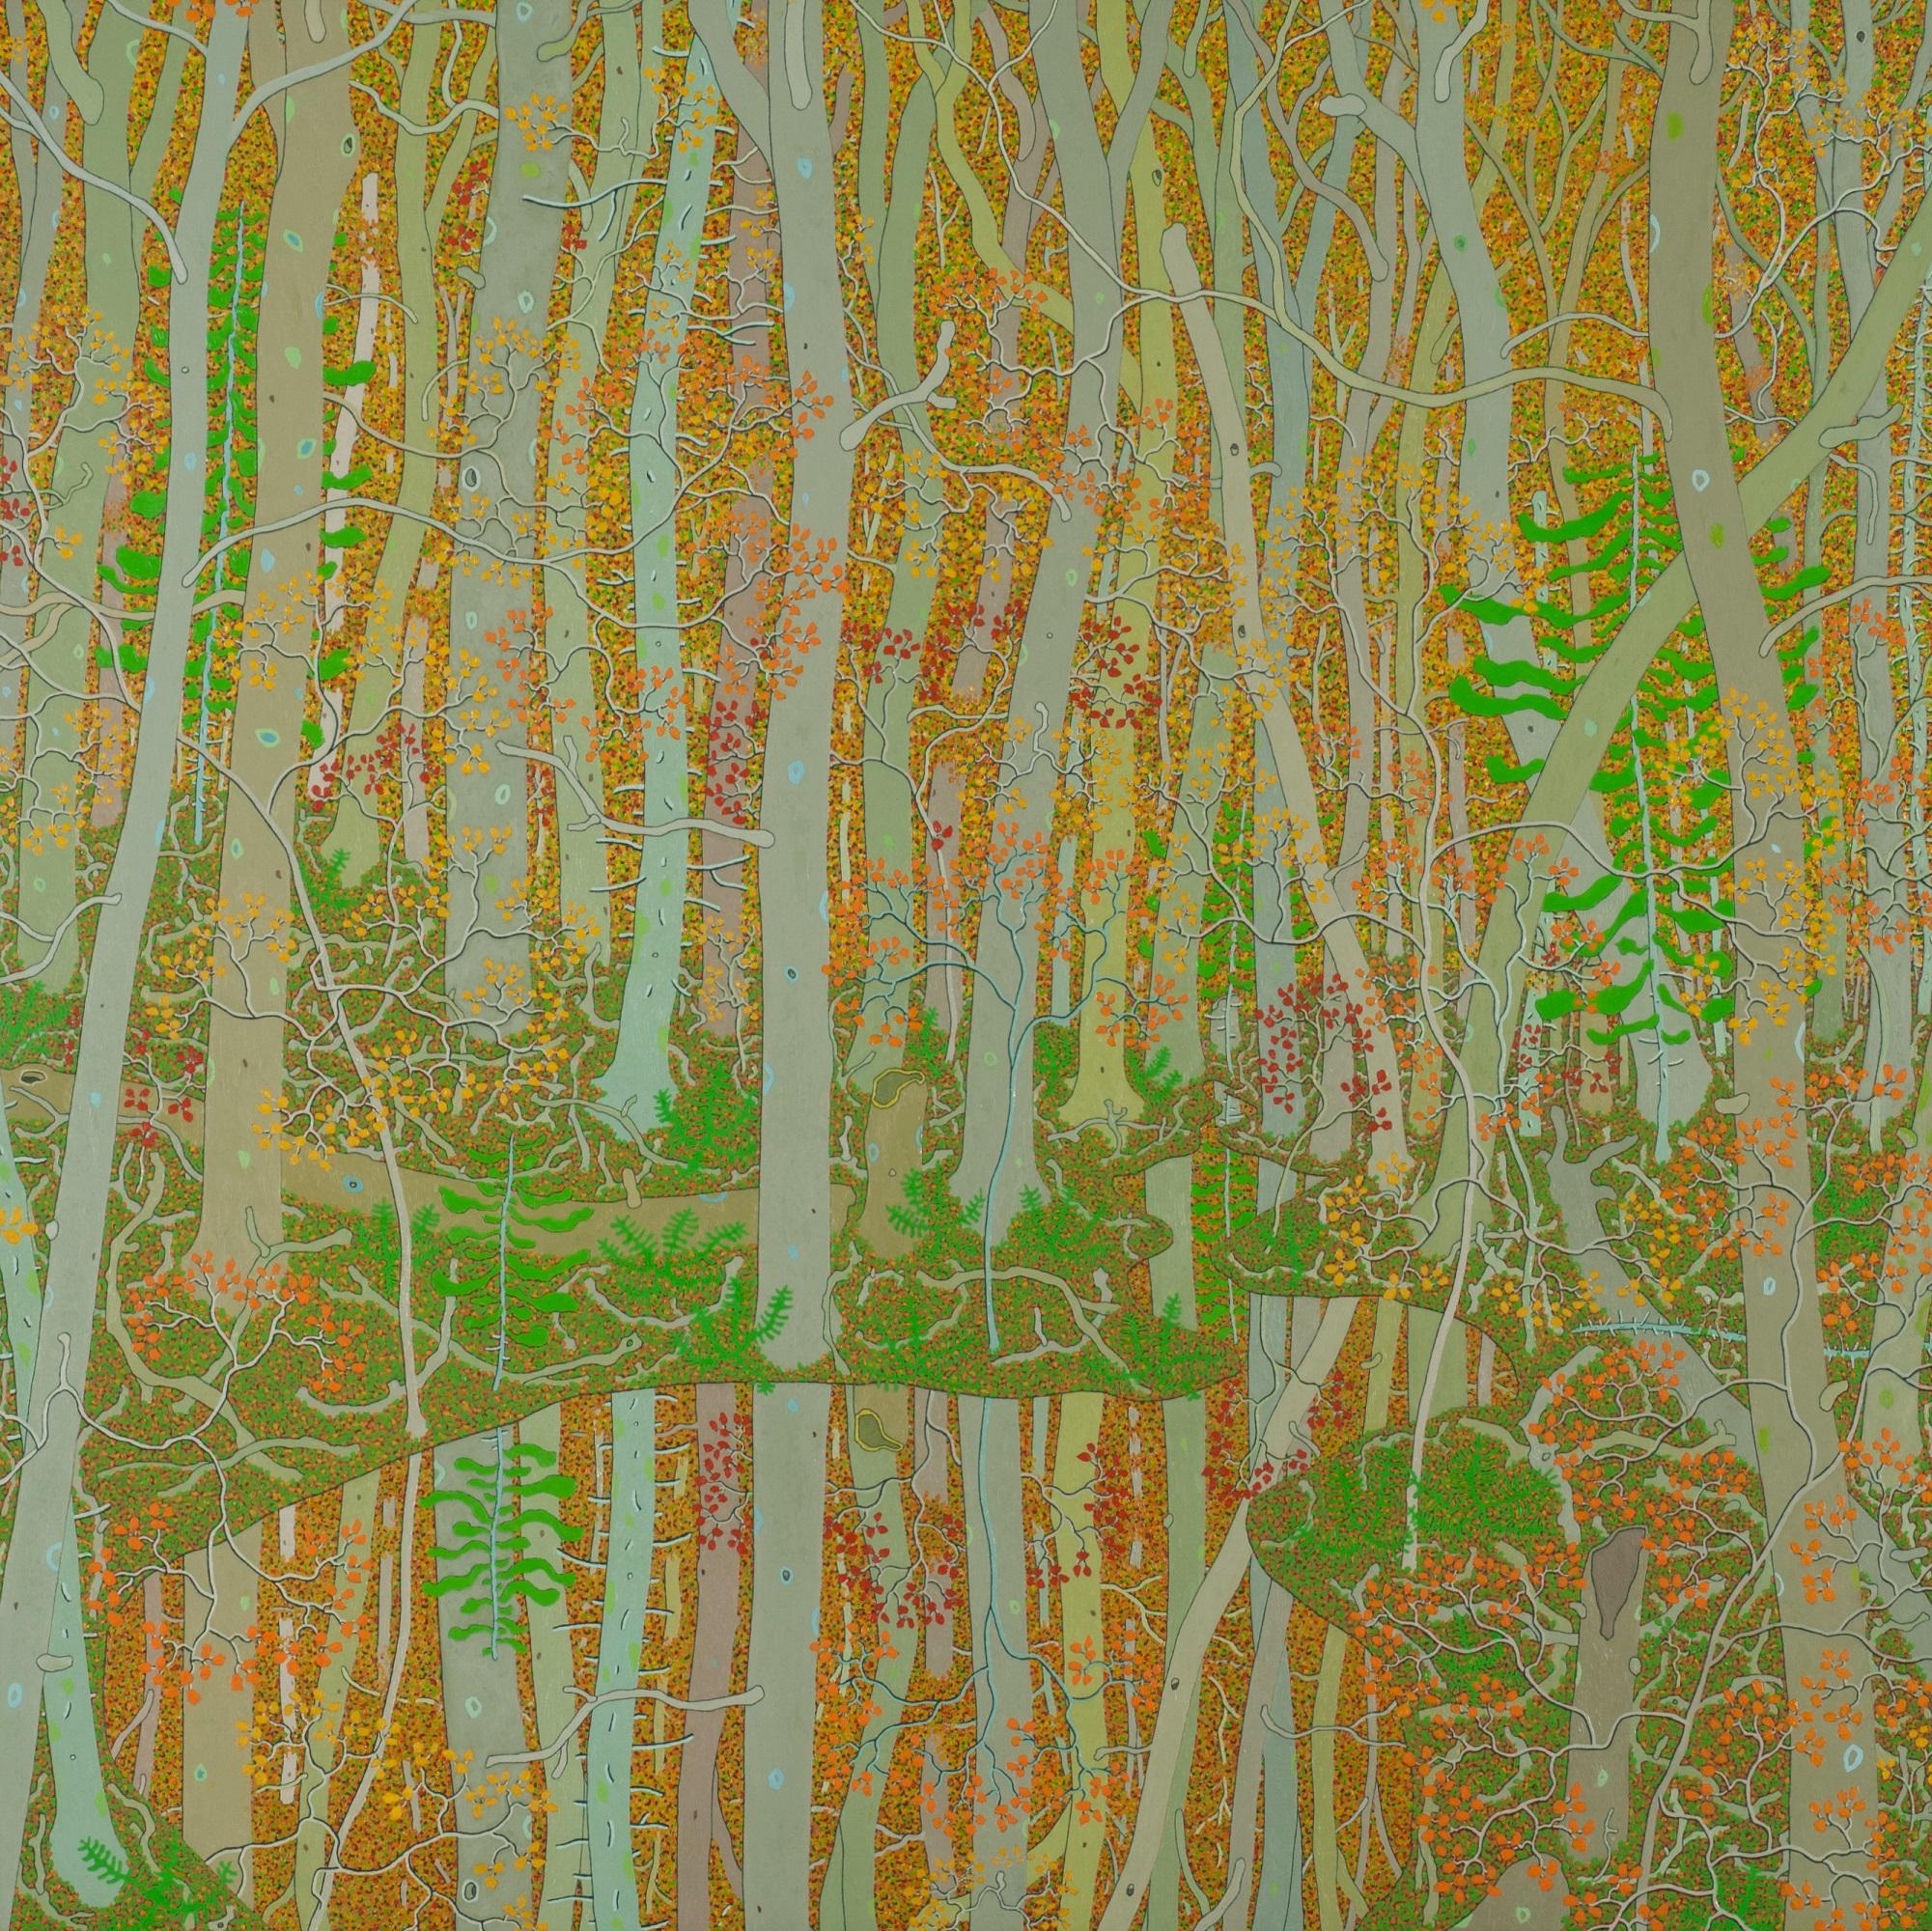 Gregory Hennen Landscape Painting - Reflections at the Spring's Entrance, Forest Landscape, Beige, Orange, Green